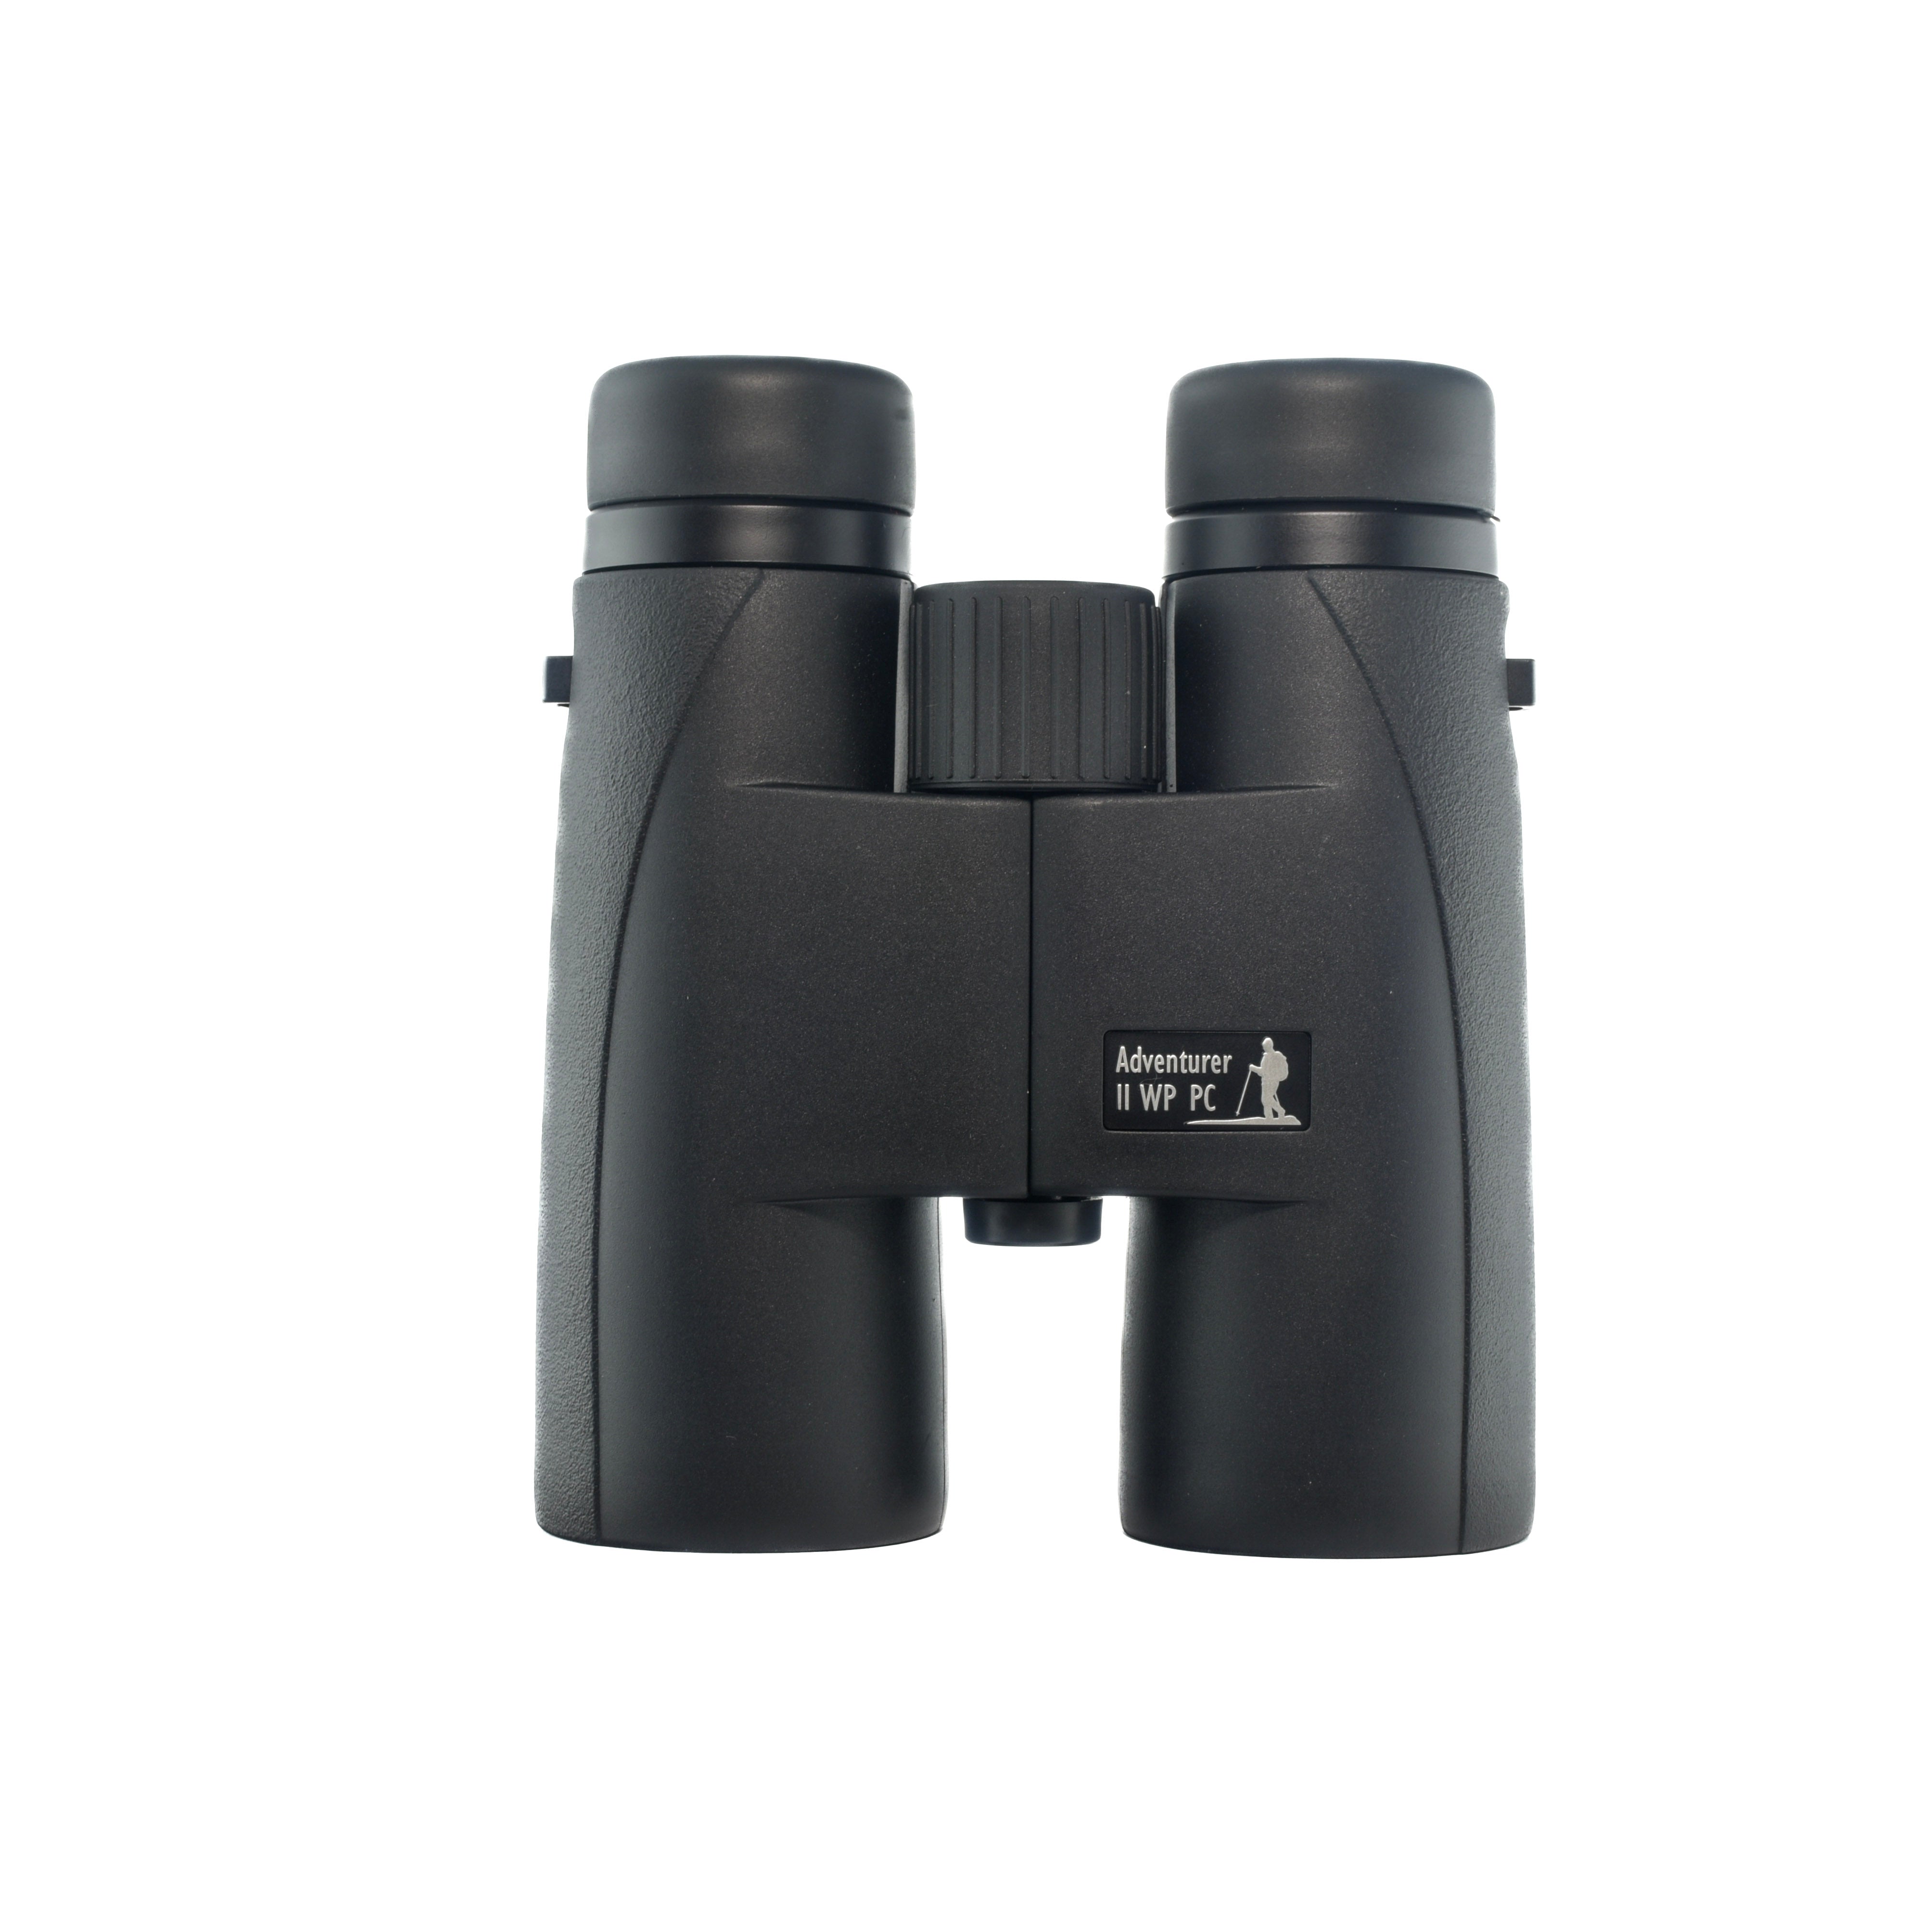 Opticron Adventurer ii 10x42 WP PC Binoculars (Black)